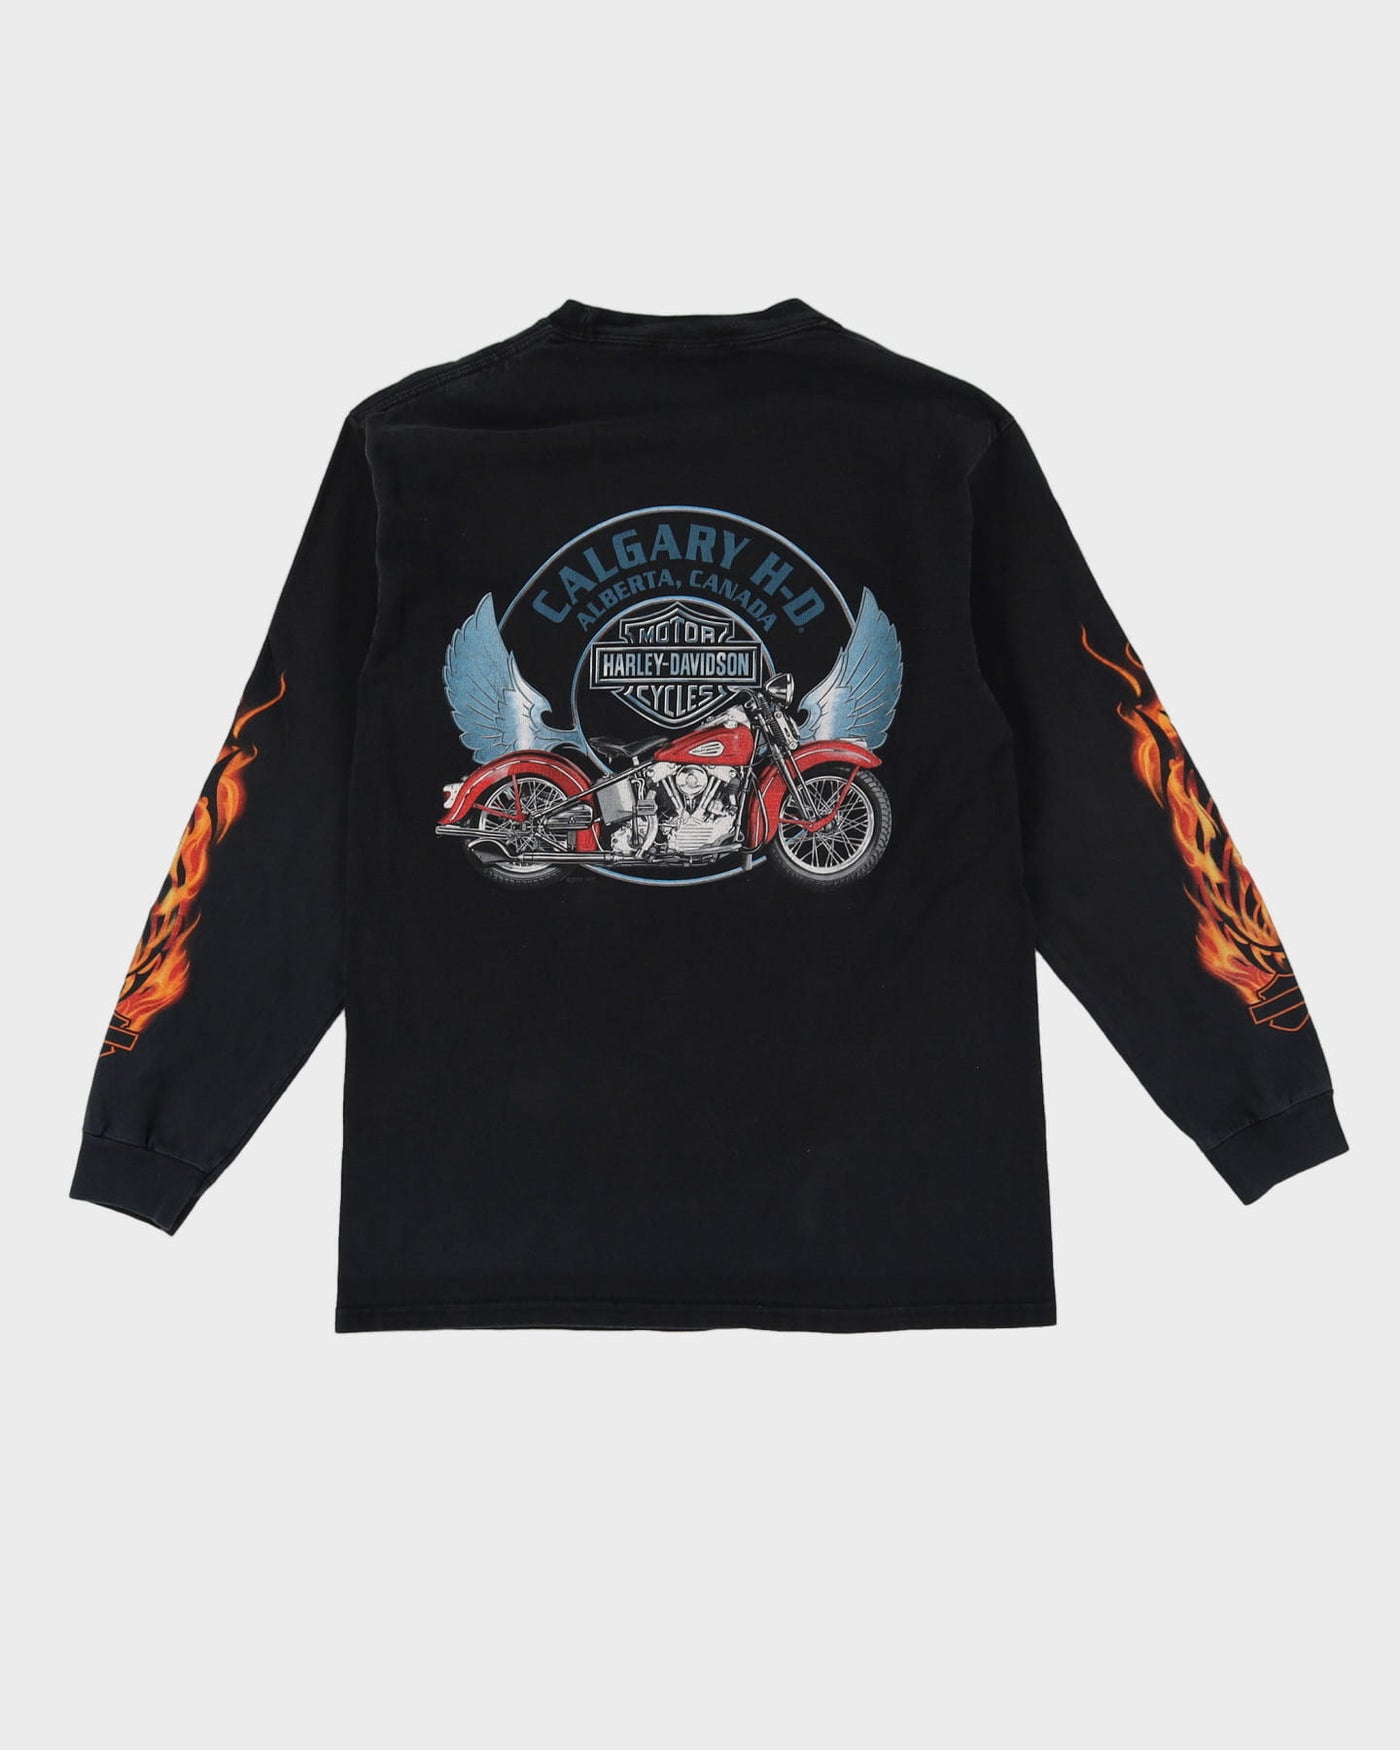 Harley Davidson Black Flaming Logo Long Sleeve Graphic T-Shirt - M